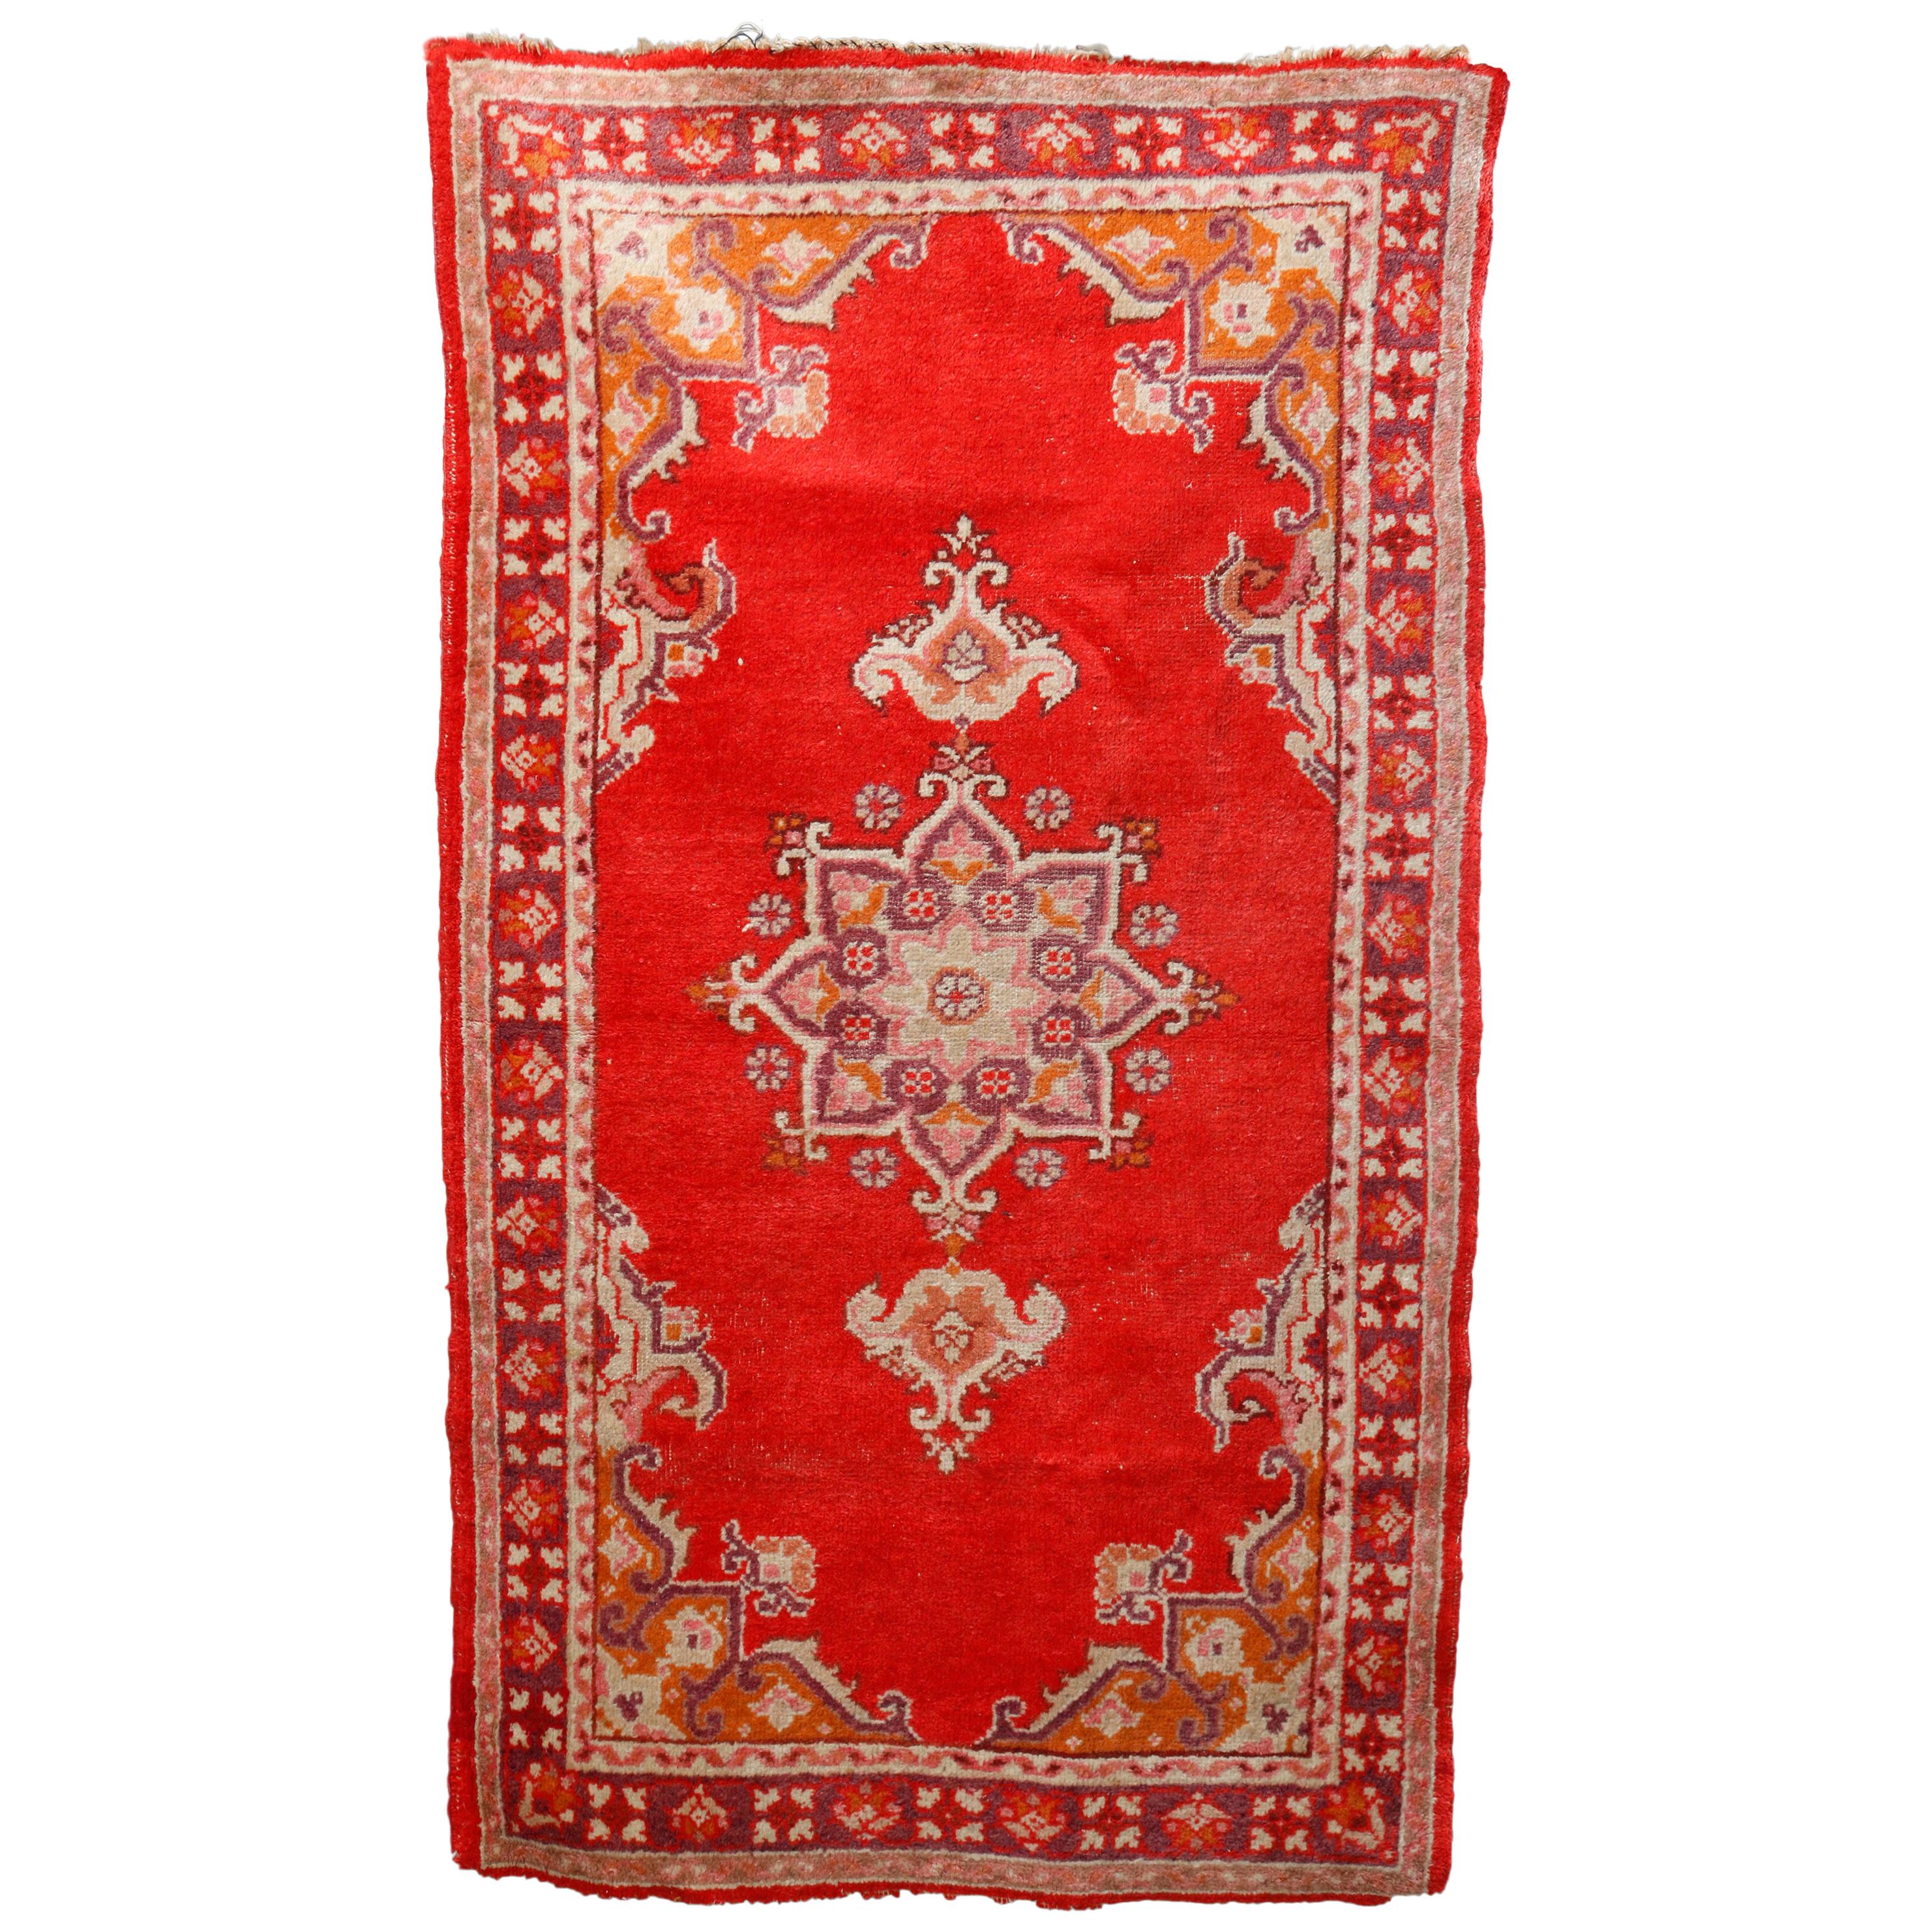 Antique Turkish Oushak Oriental Rug, circa 1920